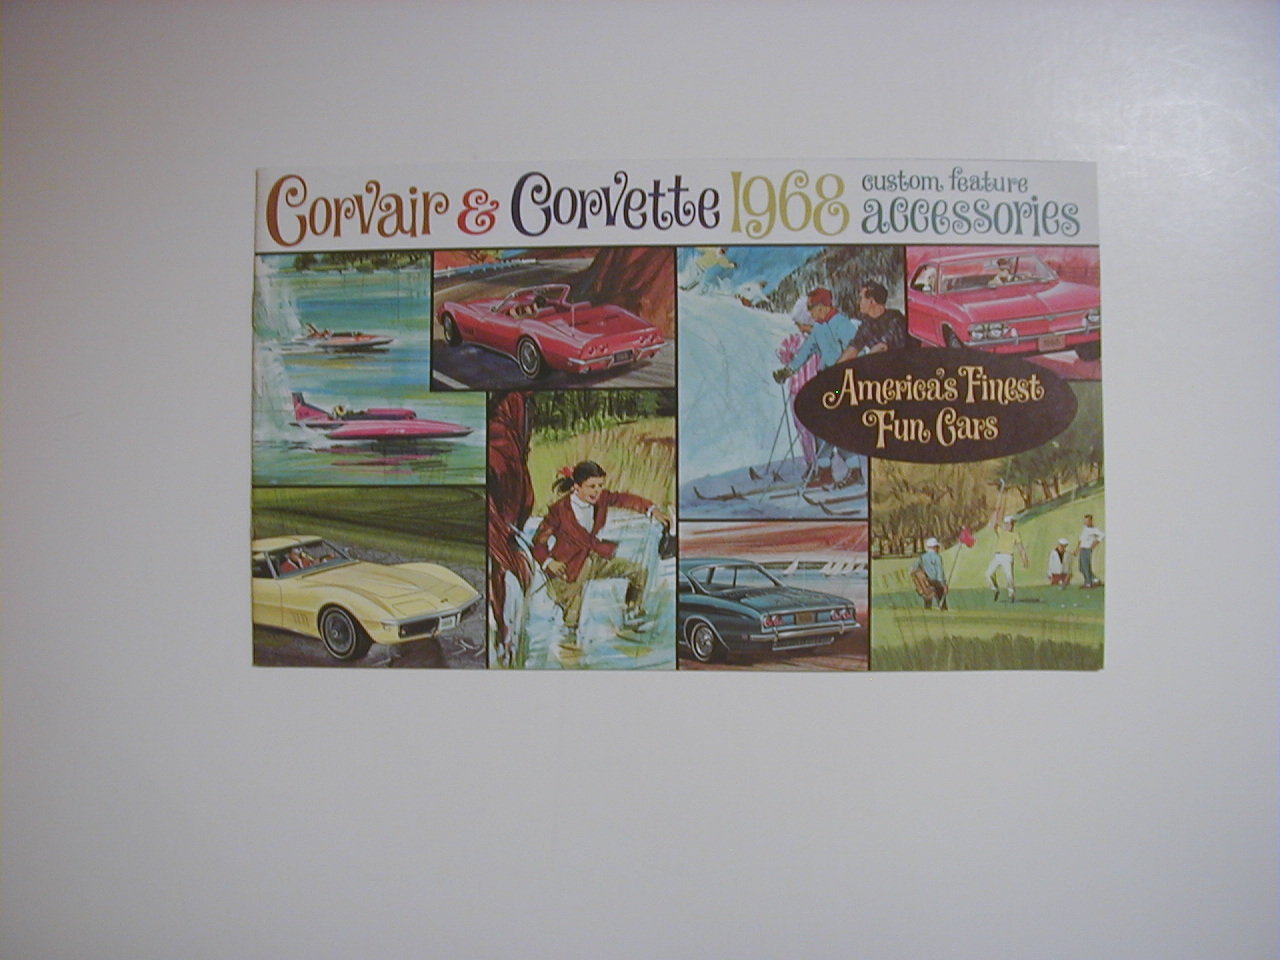 Corvette & Corvair Custom Feature Accessories Brochure, 1968